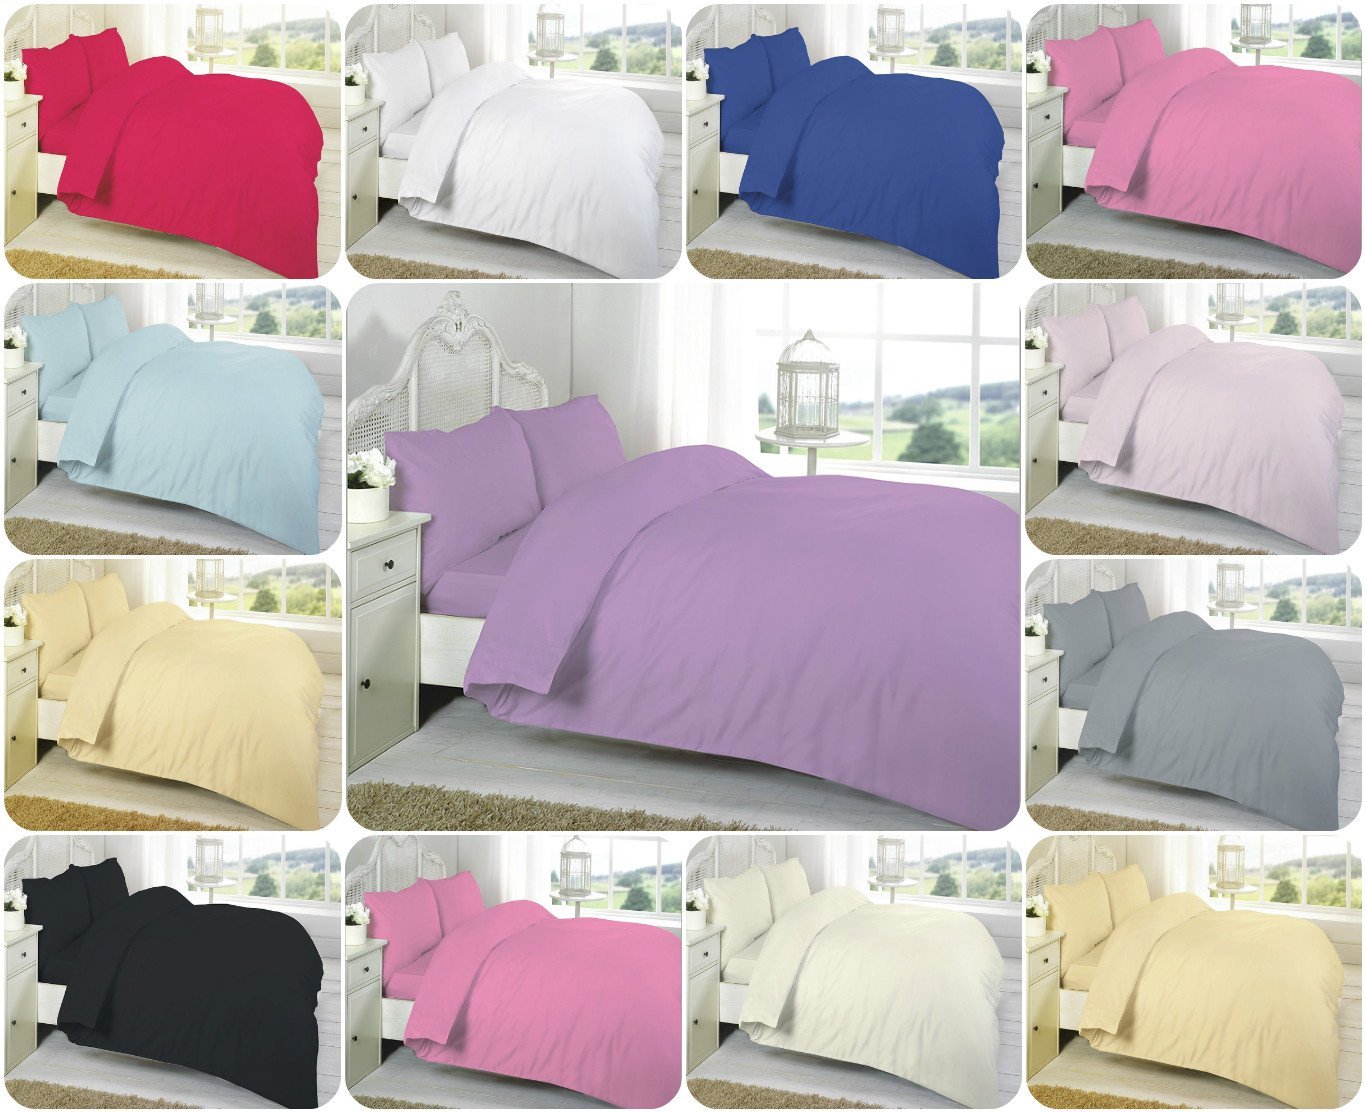 T200 100% Cotton Plain Duvet Cover Sets with Optional Pillow Cases - 200 Thread Count Super Quality